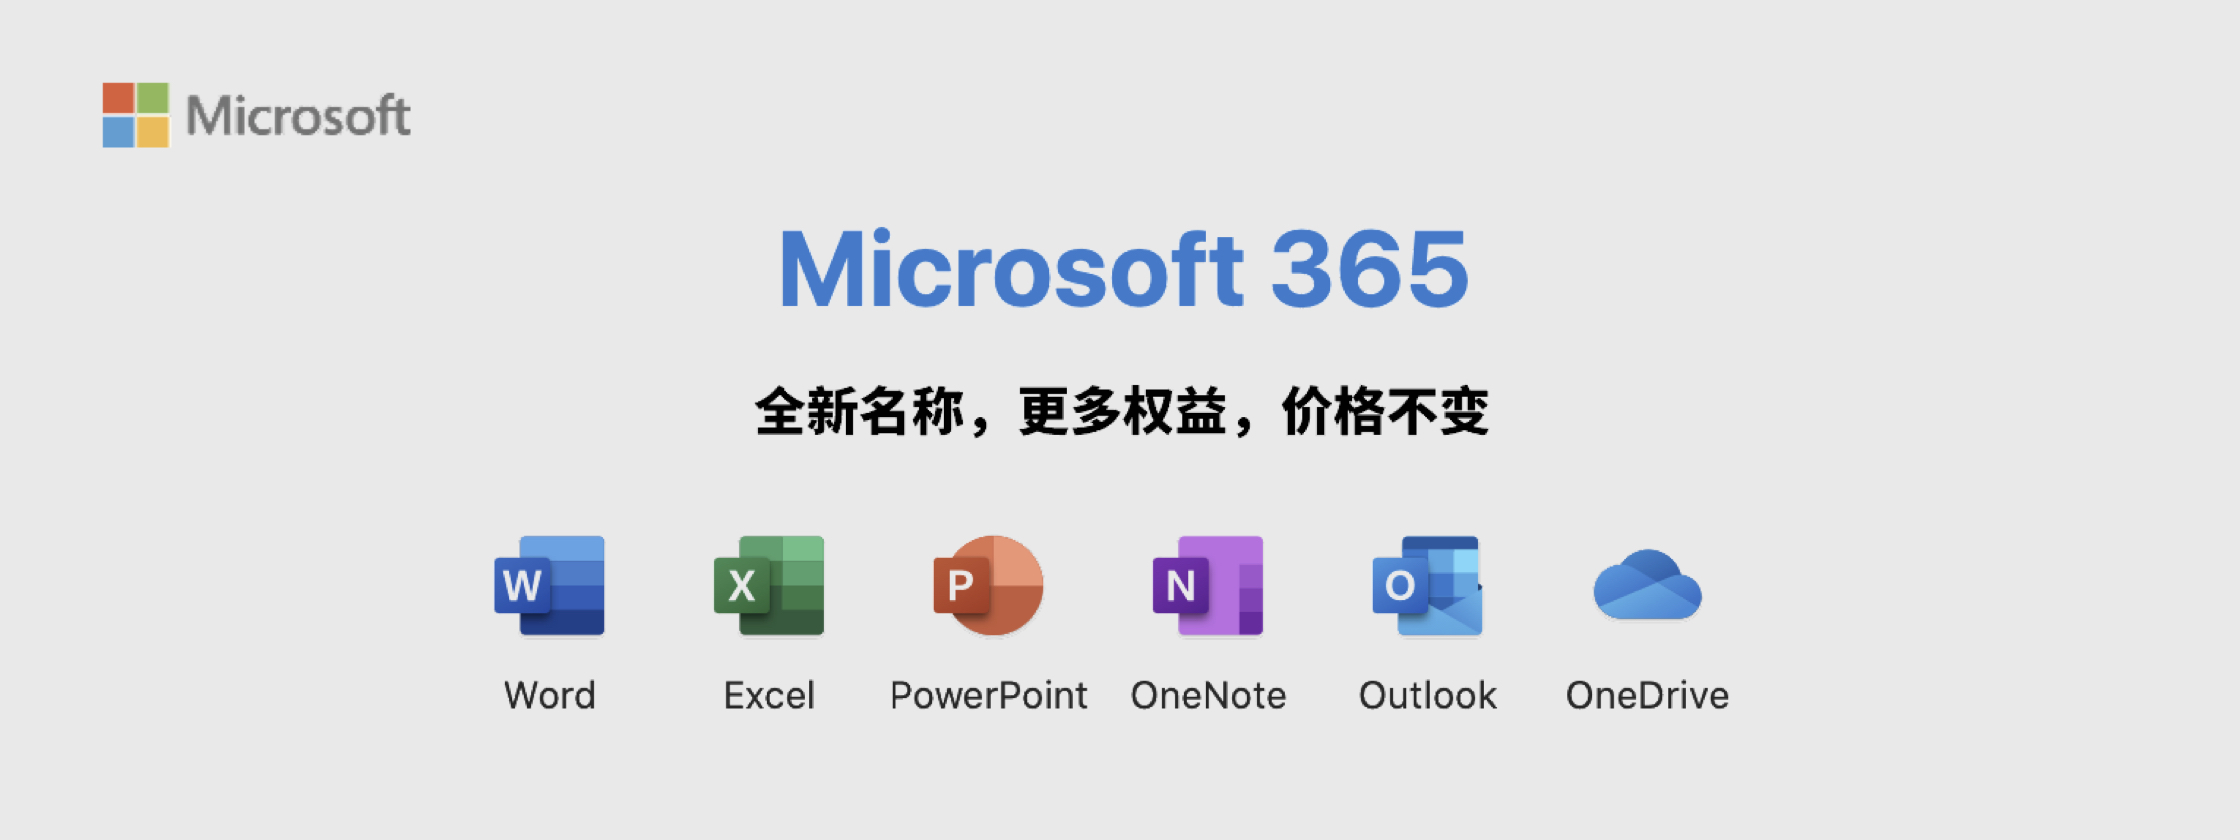 再见 Office 365，全新 Microsoft 365 已上线！